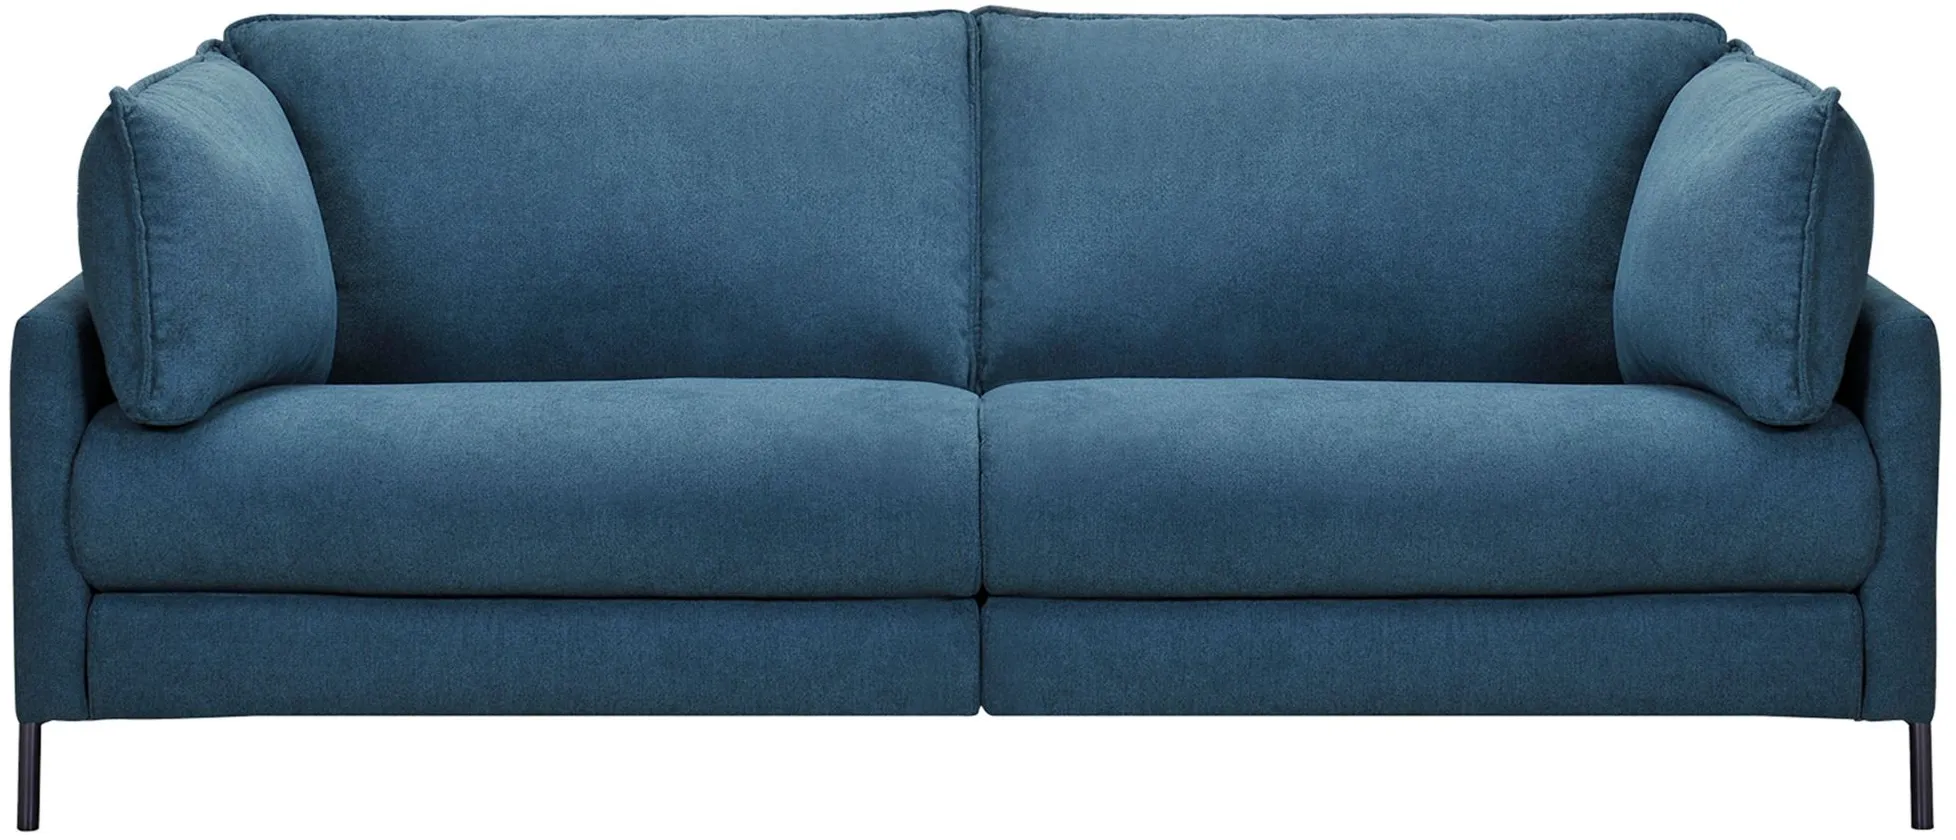 Juliett Power Reclining Sofa in Blue Lake by Armen Living